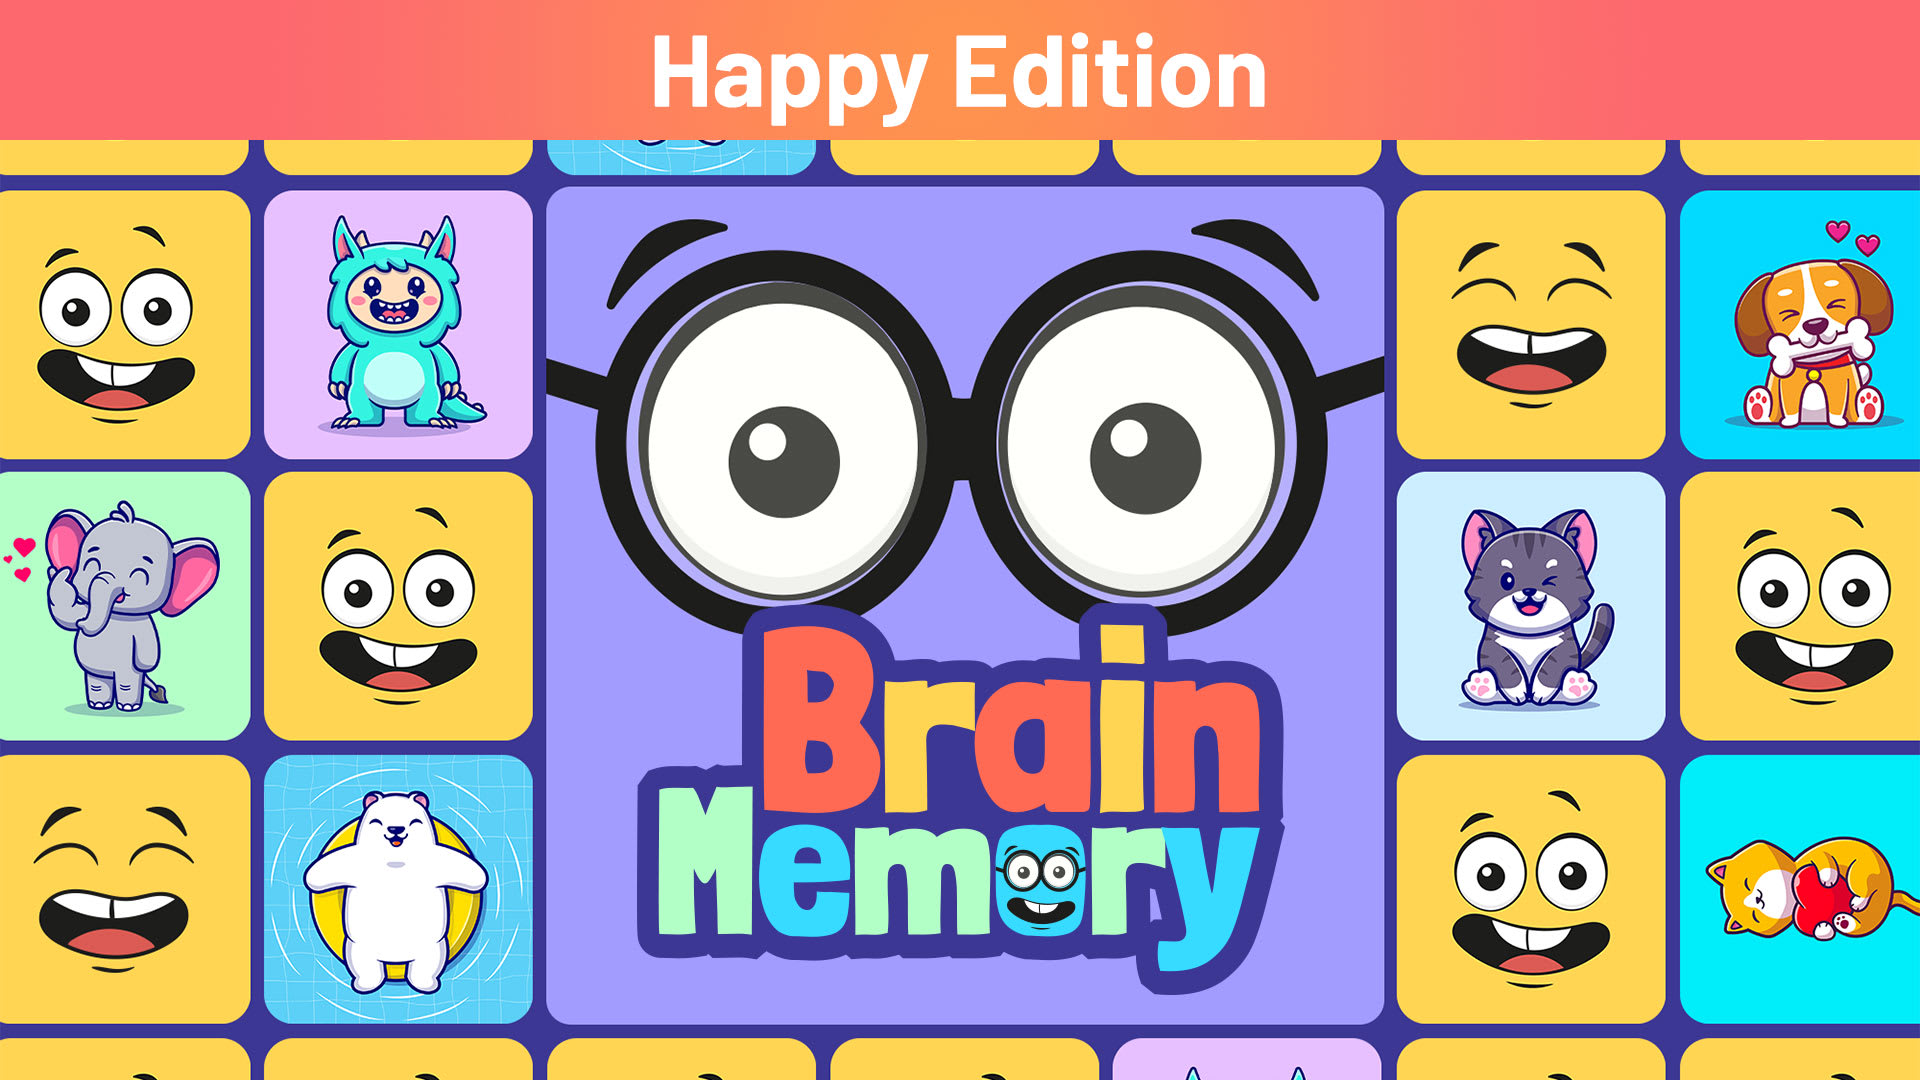 Brain Memory Happy Edition